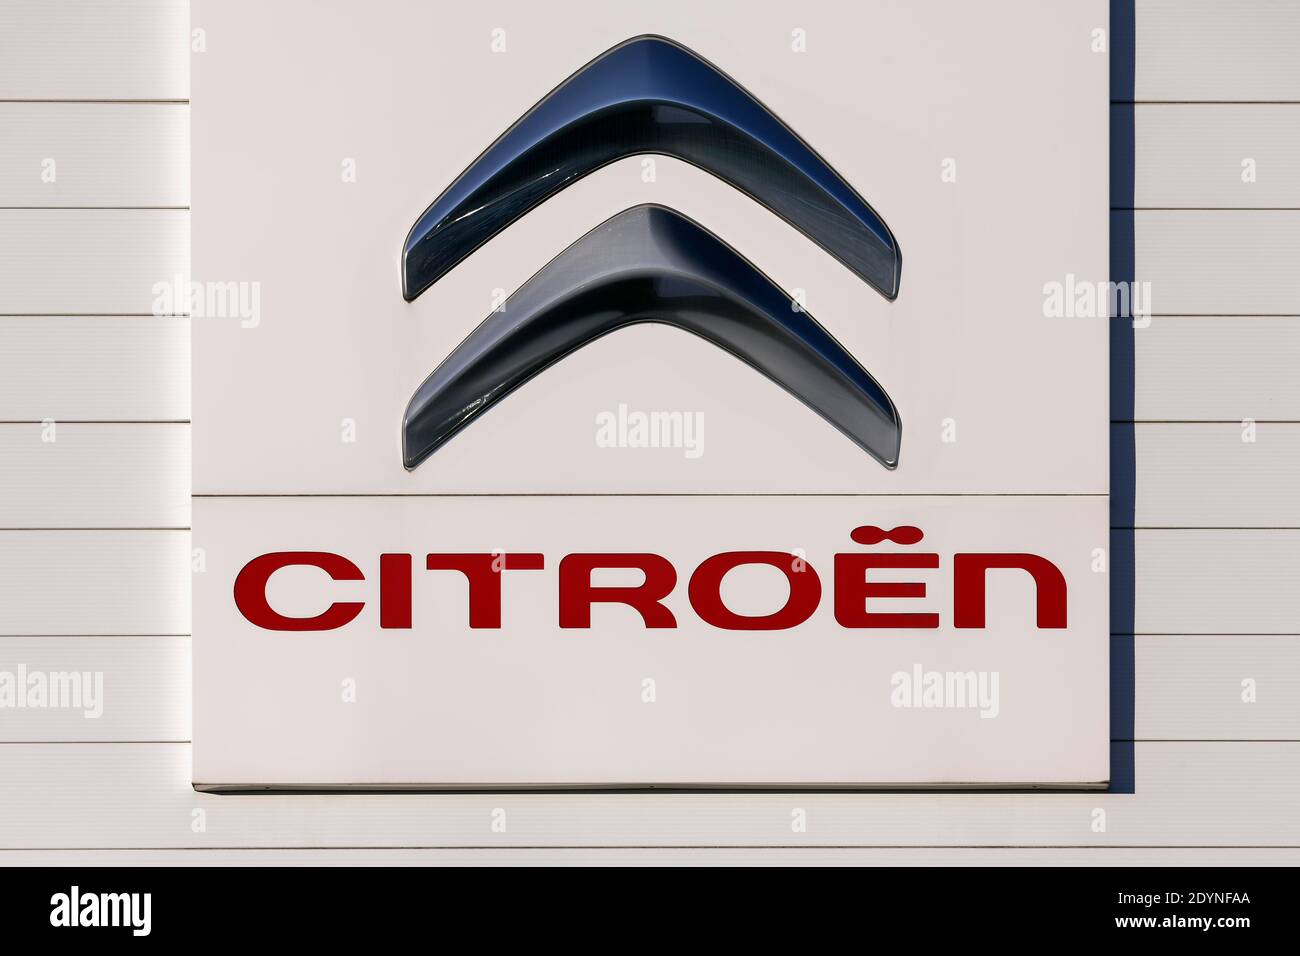 Citroen, logo on a car dealership, brand of the car manufacturer Groupe PSA, Duesseldorf, North Rhine-Westphalia, Germany Stock Photo